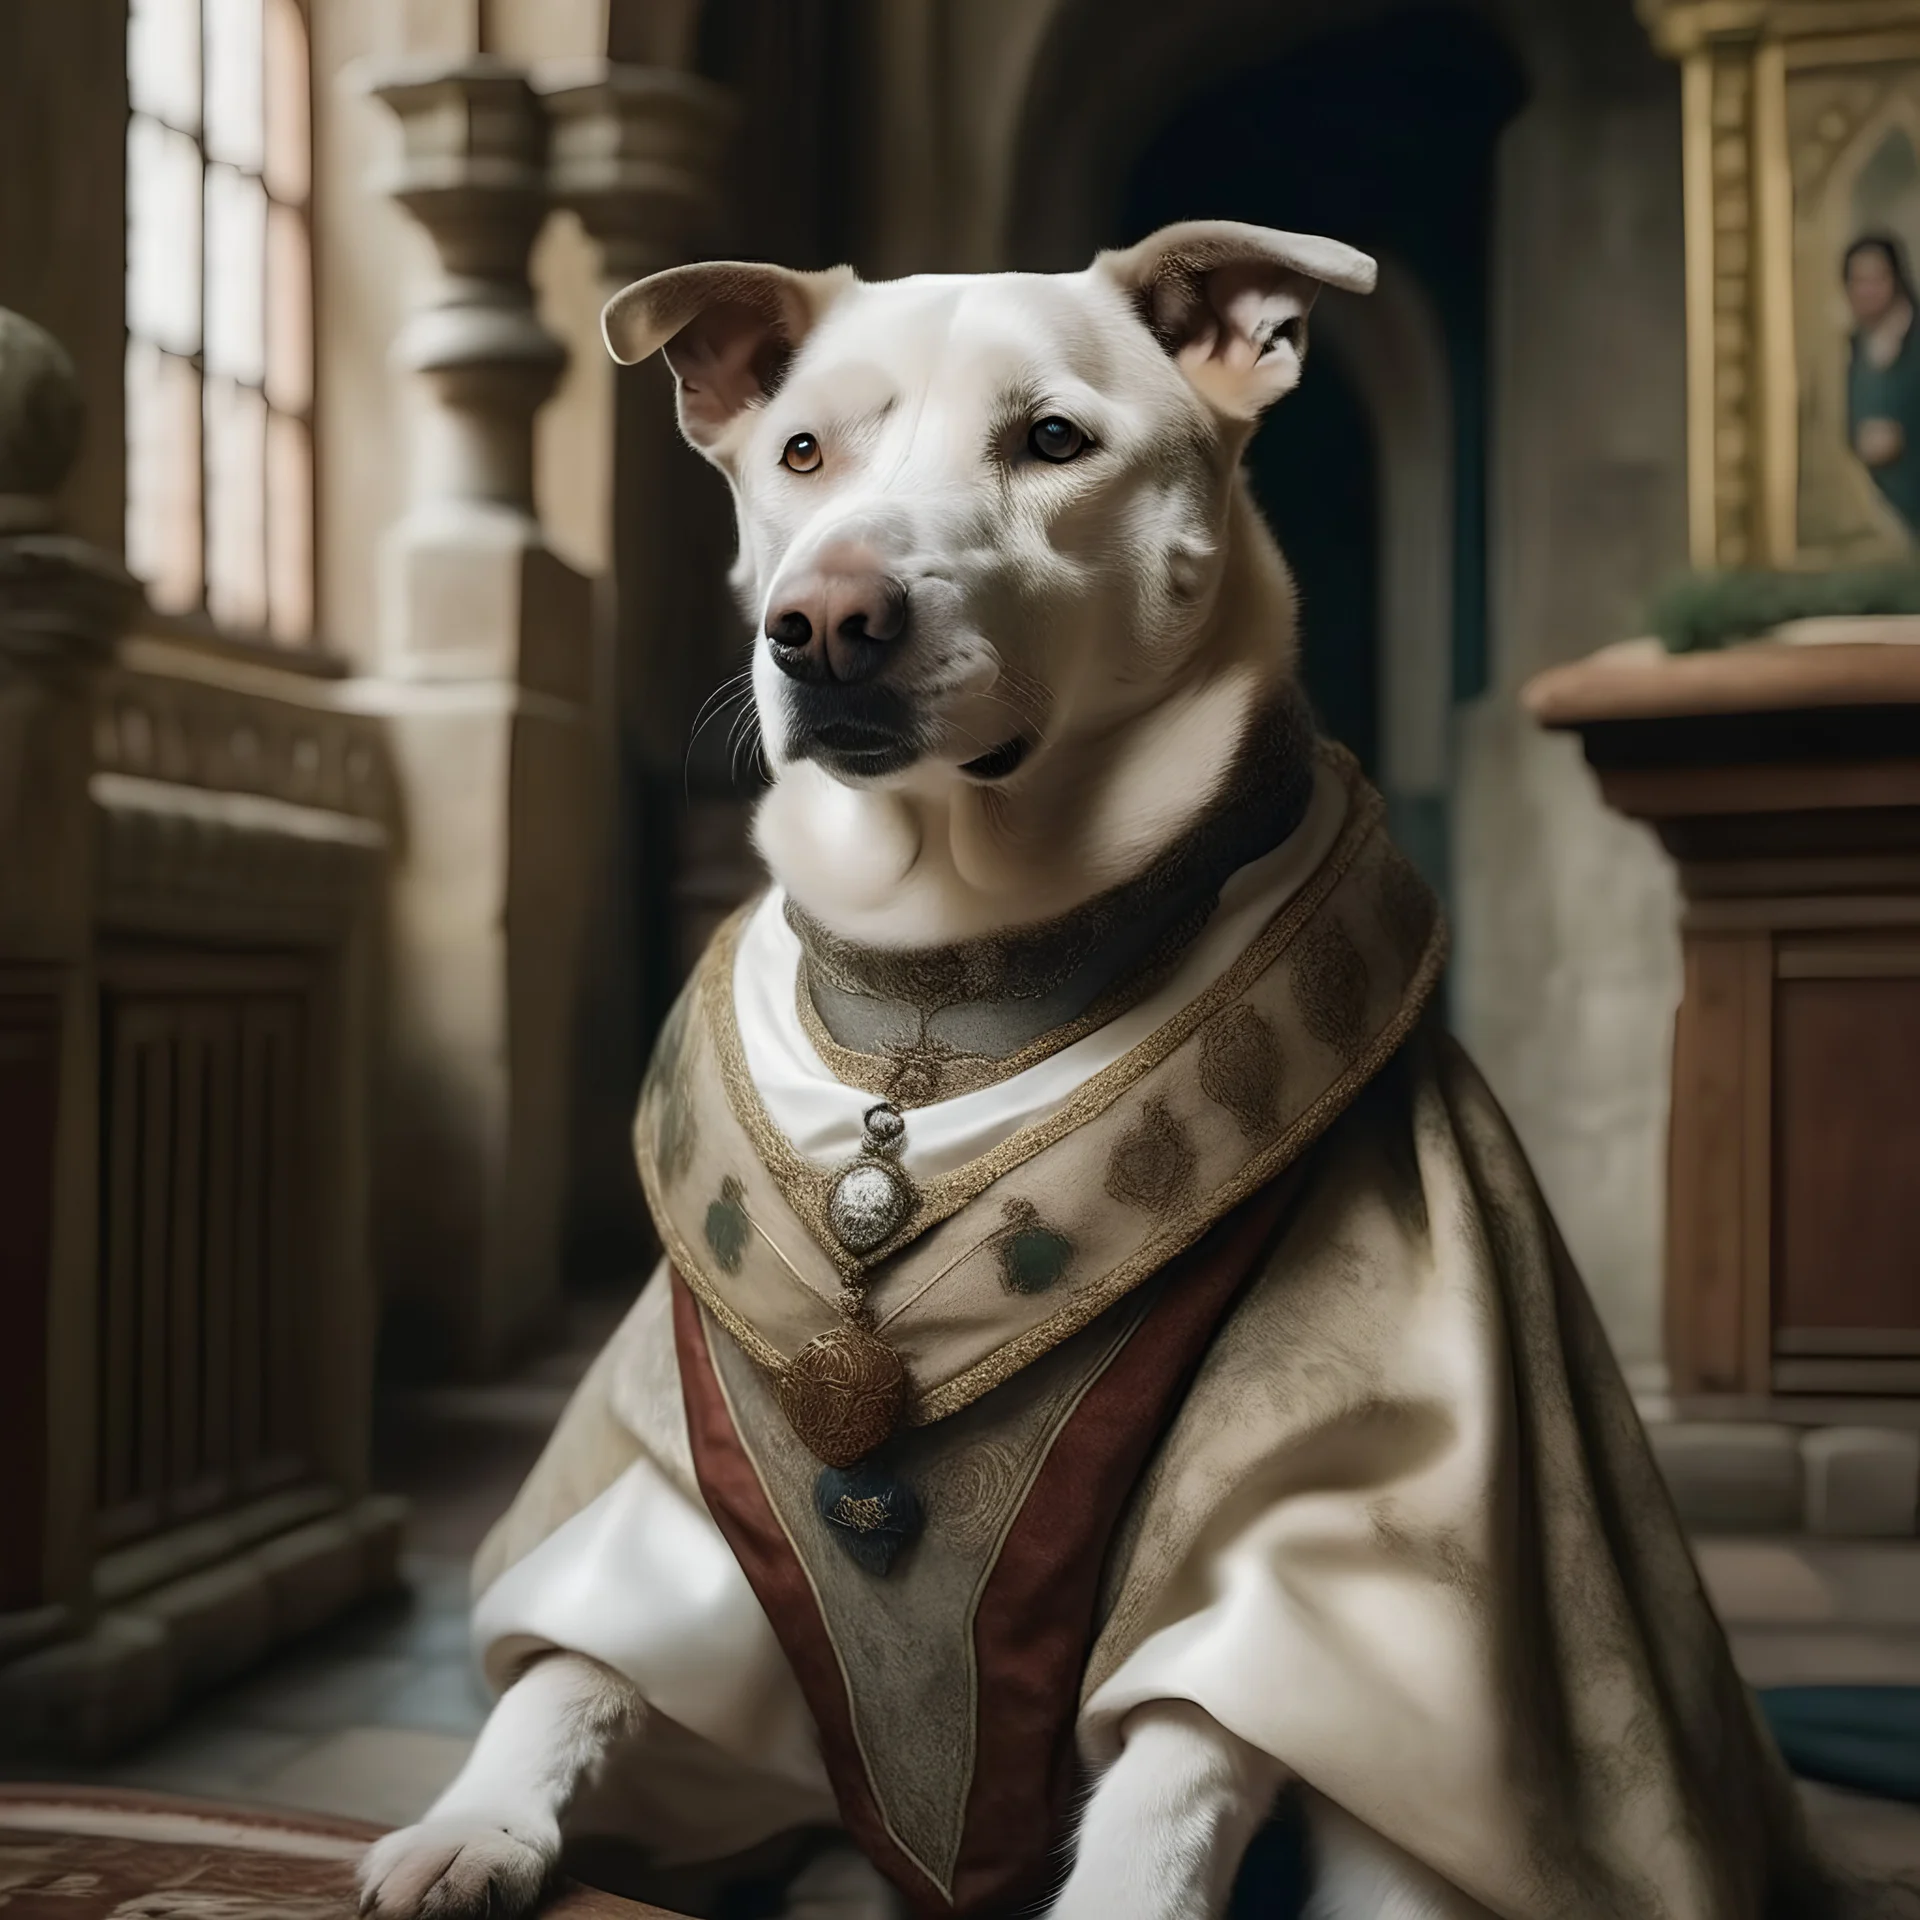 Pet dressed as human,Medieval palace,animal portrait